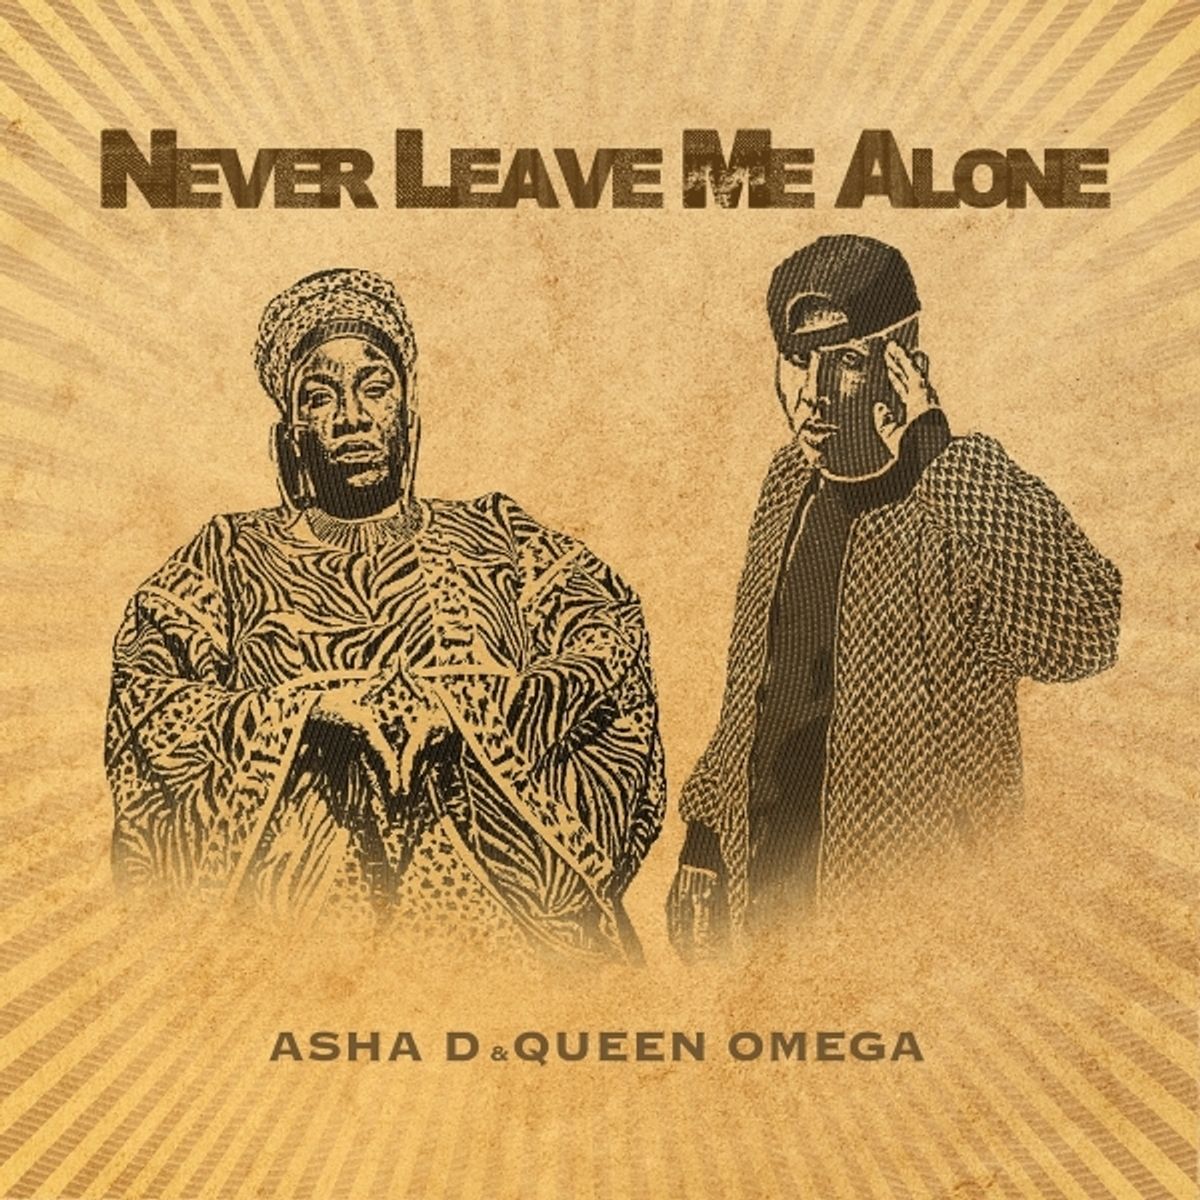 Asha D - Never Leave Me Alone